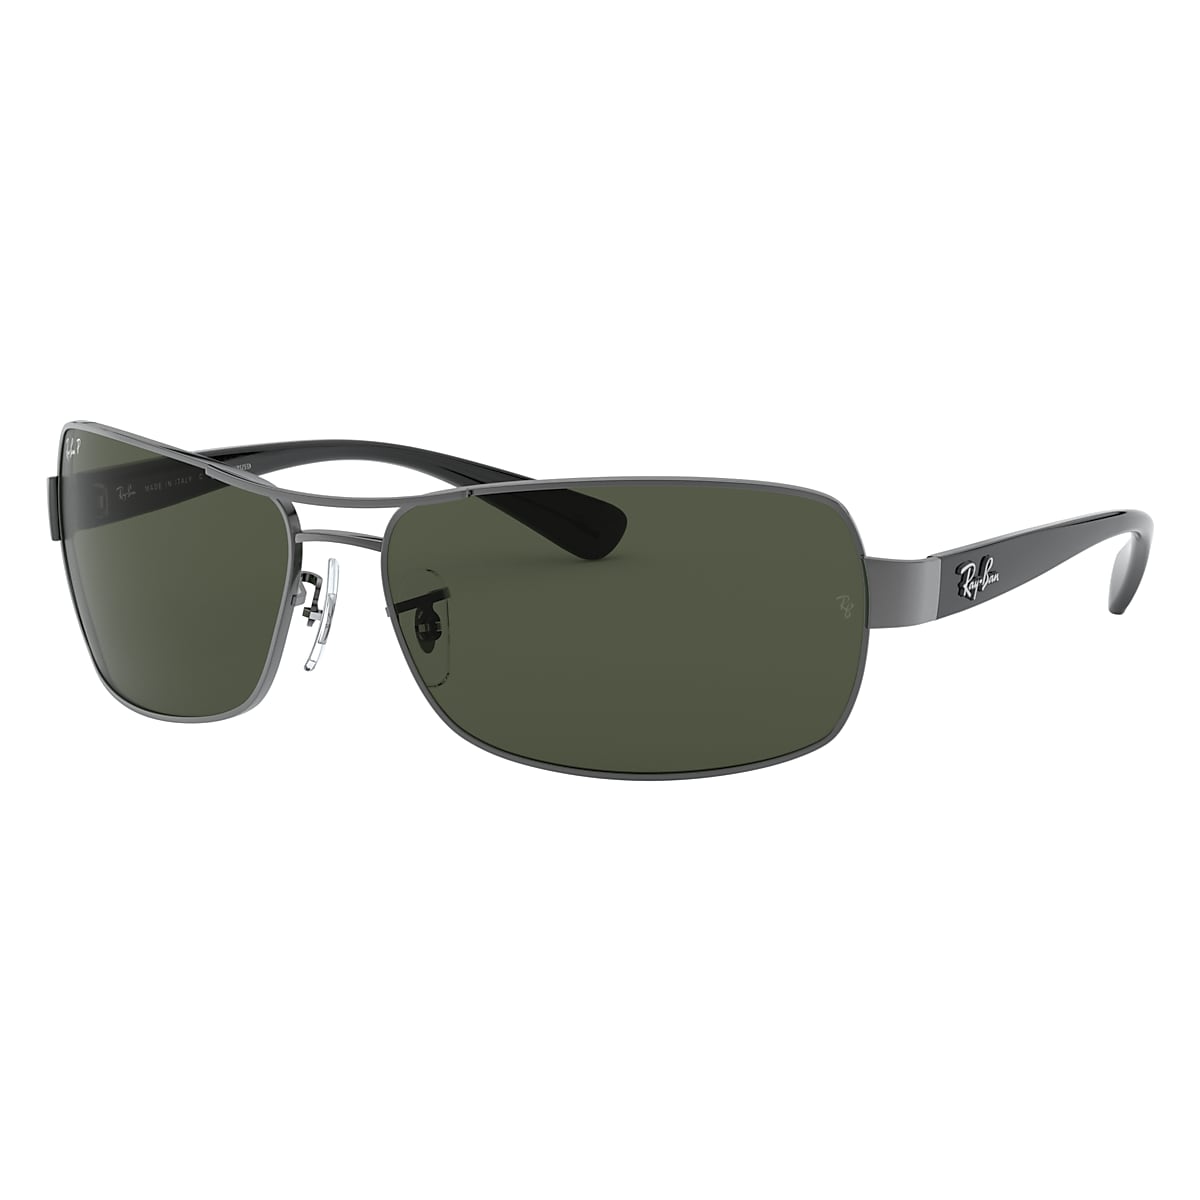 Rb3379 Sunglasses in Gunmetal Green Ray-Ban®